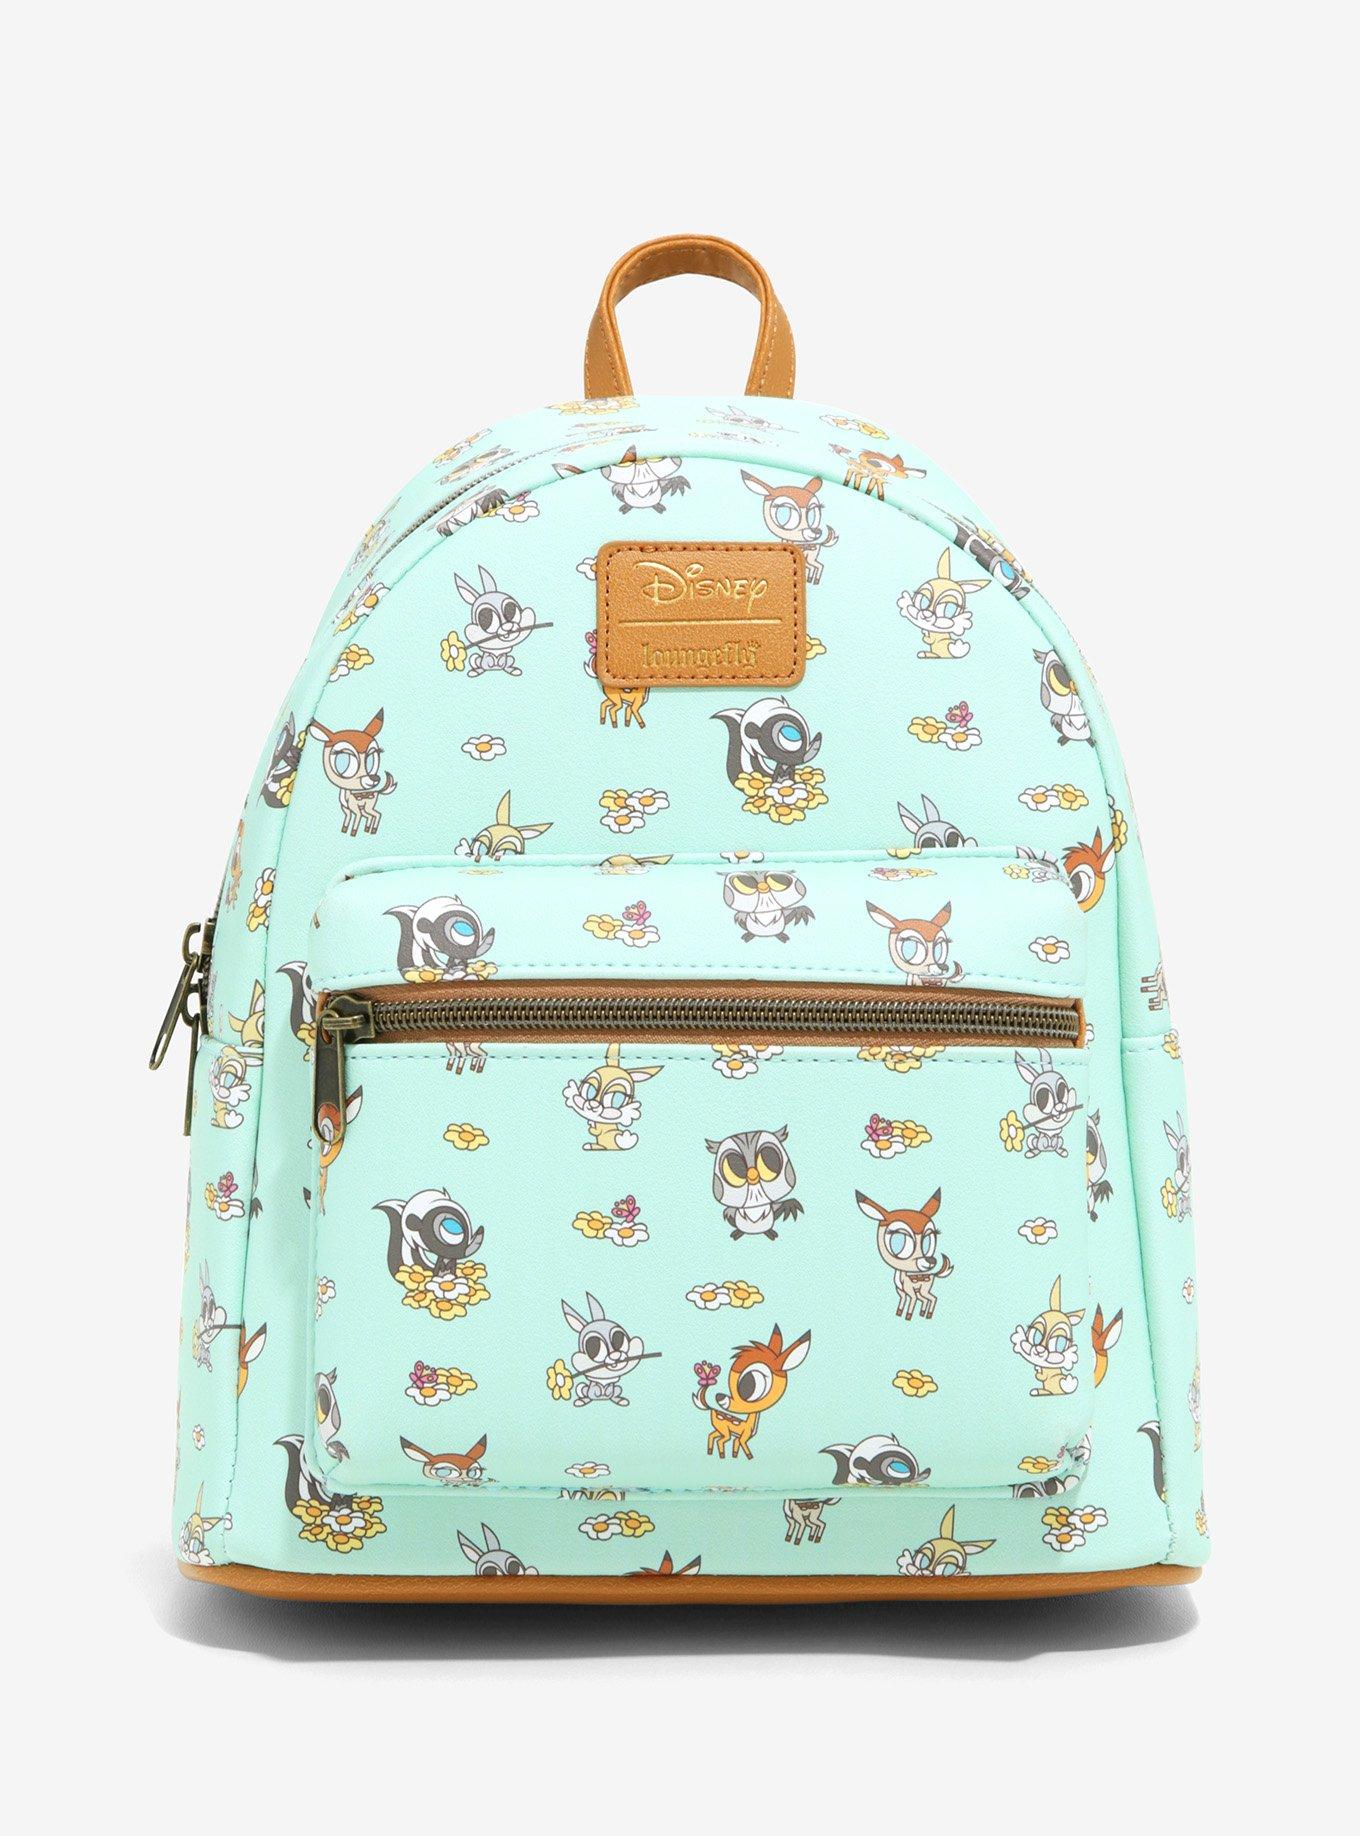 Disney Loungefly Hocus Pocus Backpack Anime Women School Bags